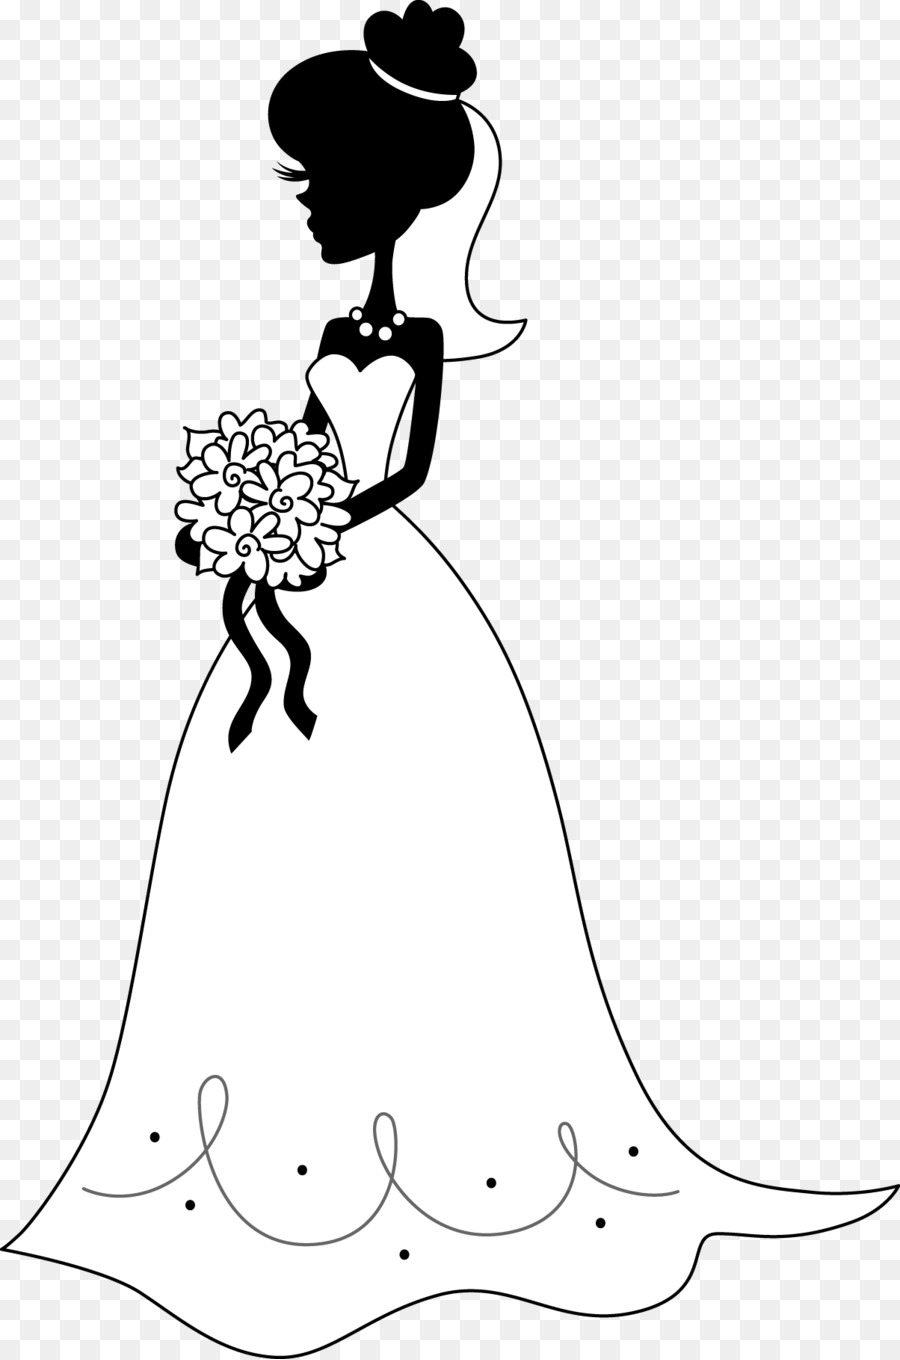 Bride Silhouette Woman Flower bouquet - bride png download - 1204*1818 - Free Transparent  png Download.